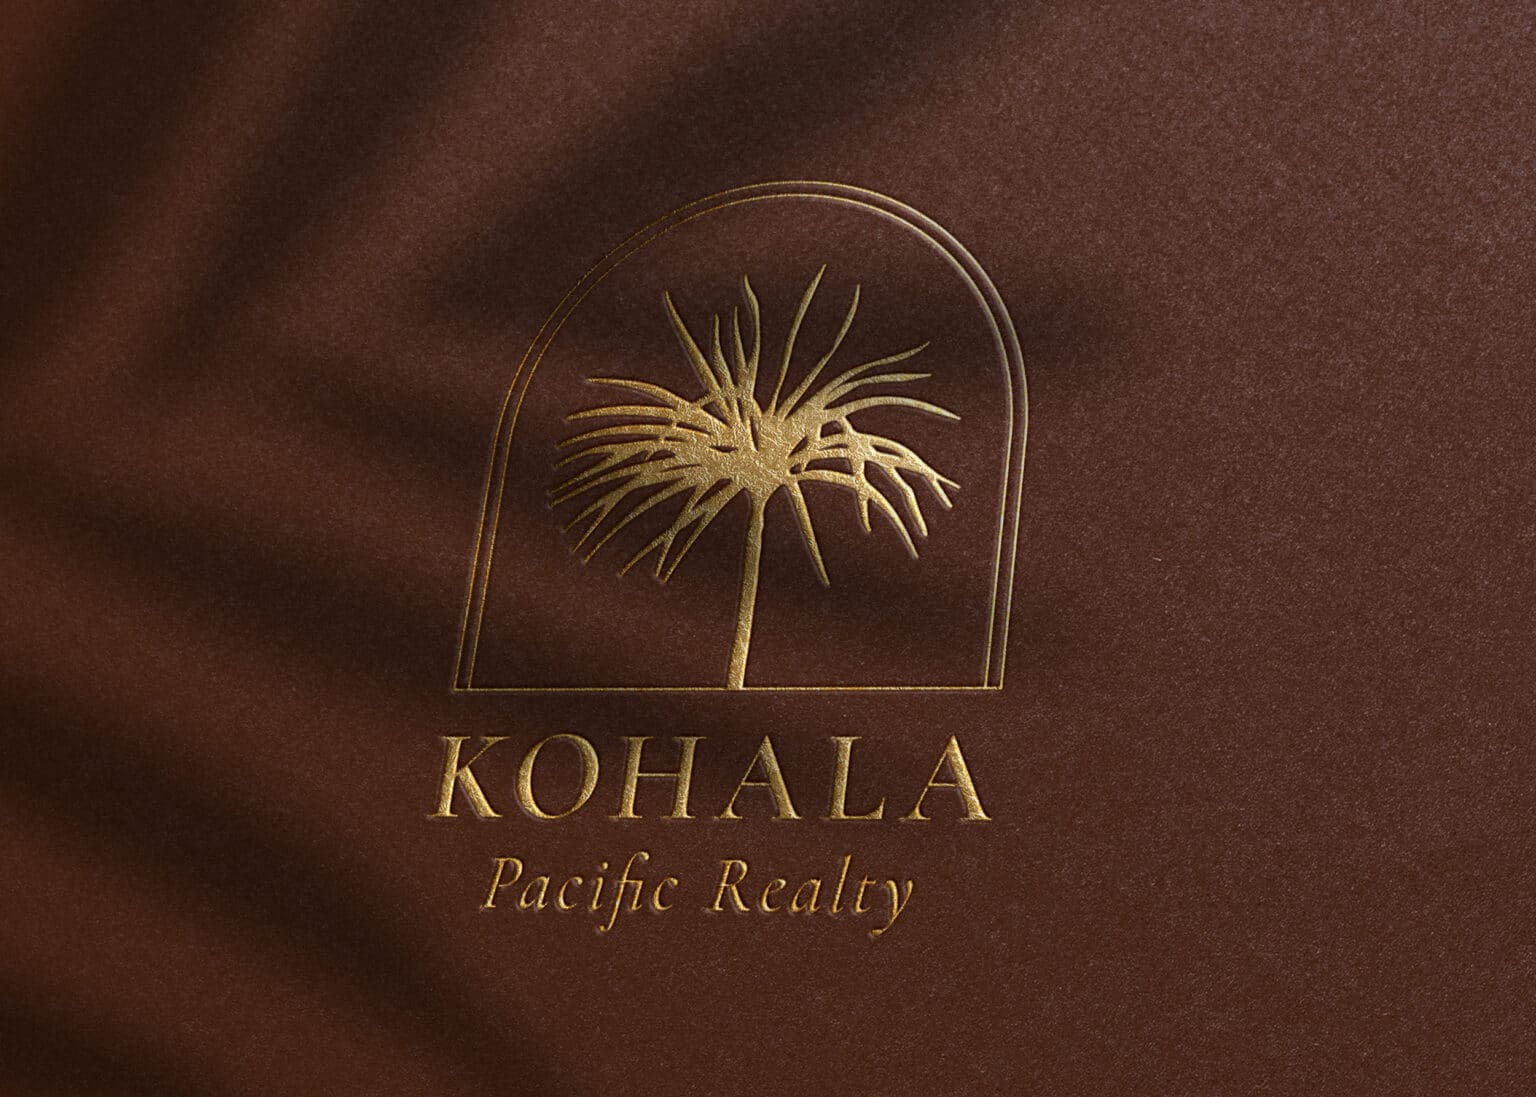 Giant-Is-Kohala-Pacific-Realty-Brand